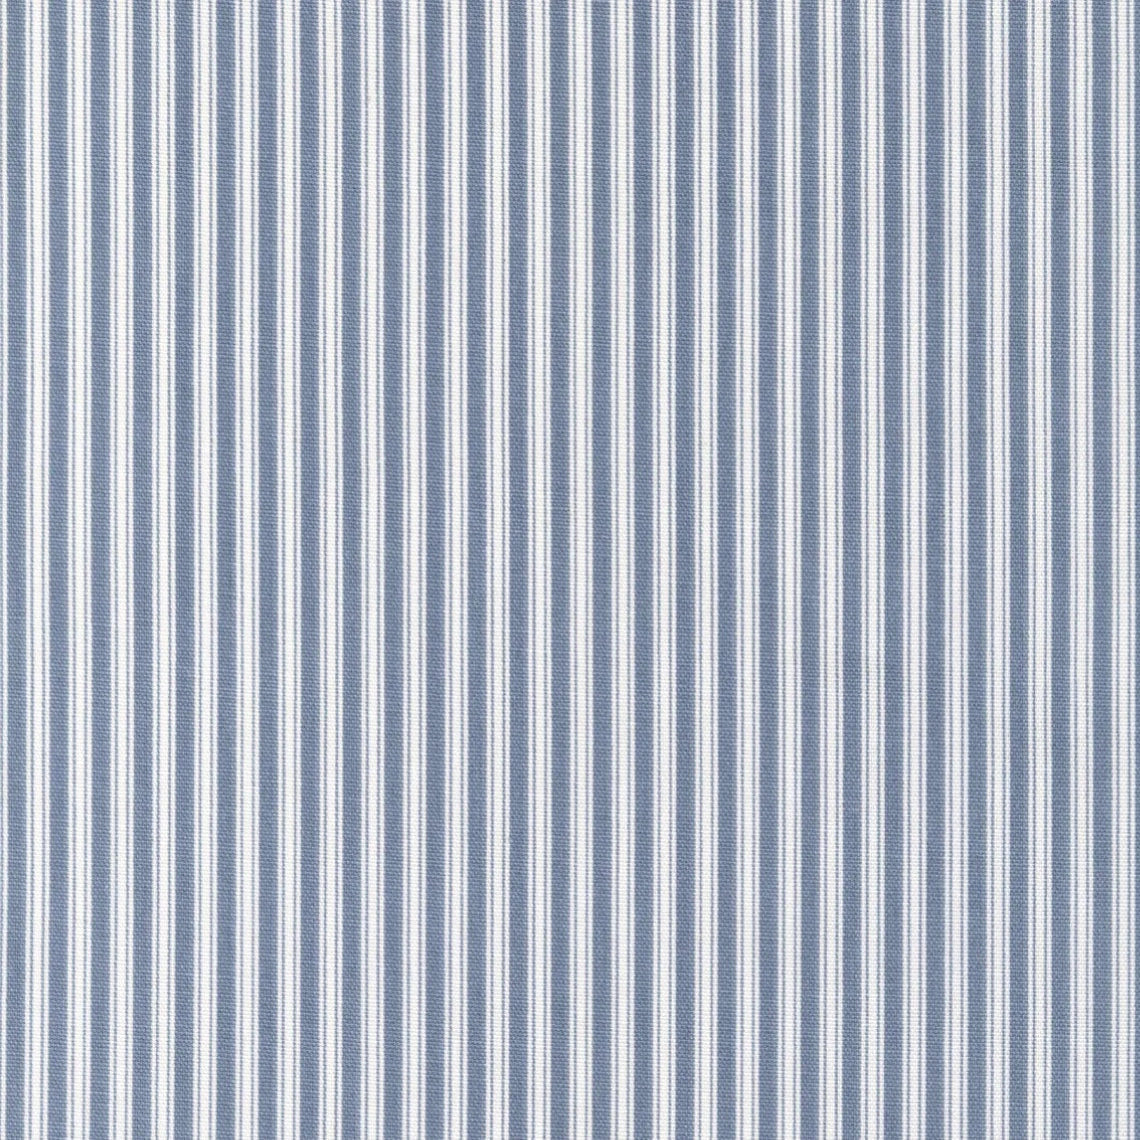 scallop valance in polo sail blue stripe on white